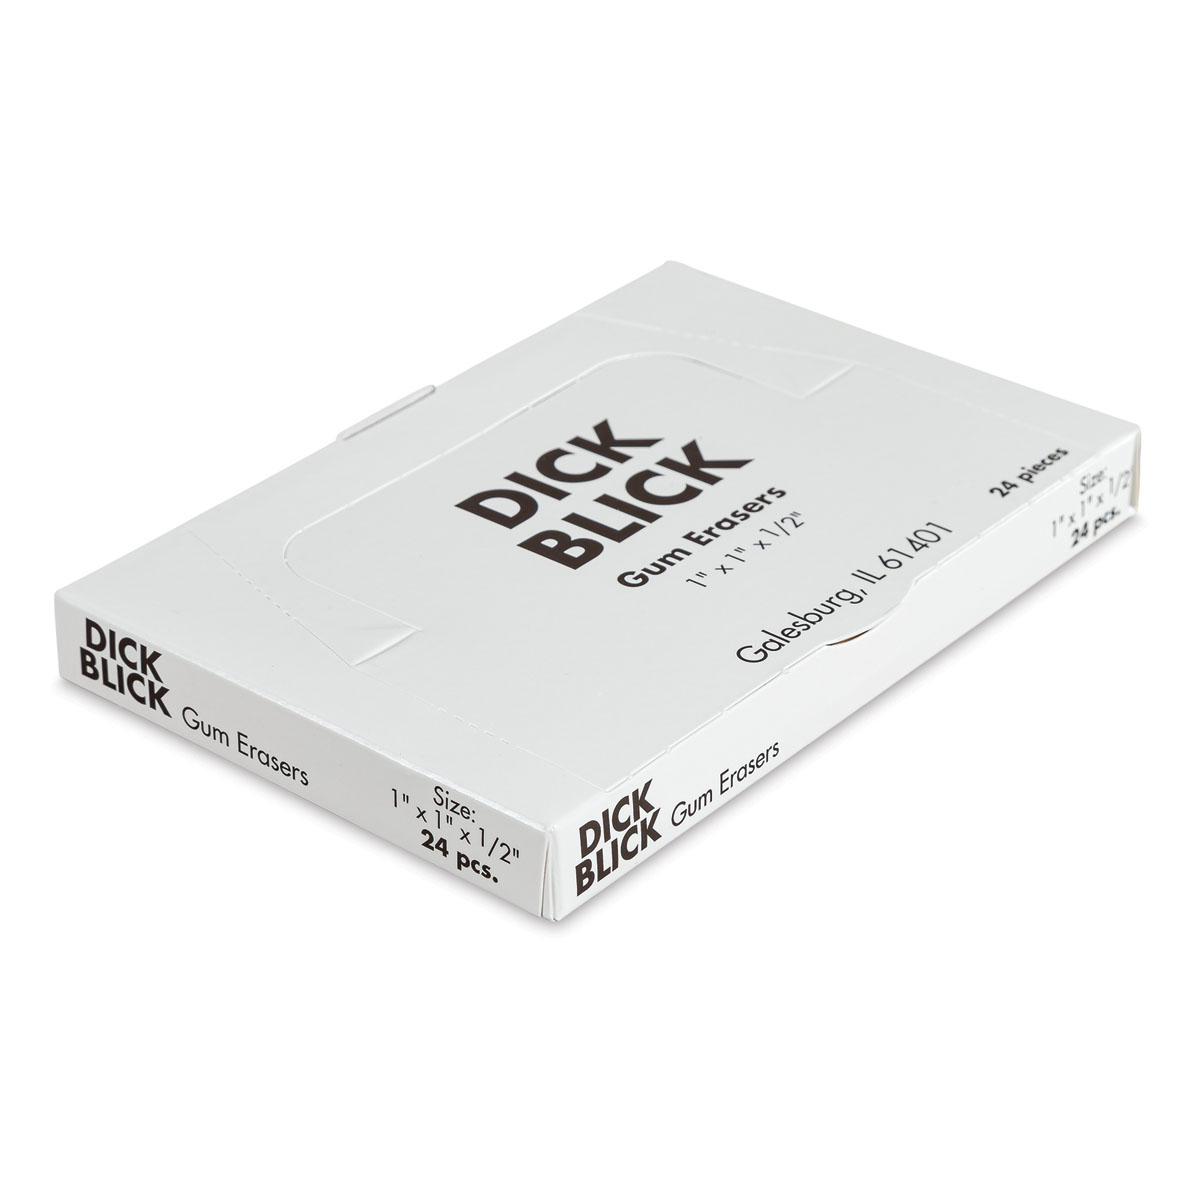 1 x 1 x 1/2 Inches Pack of 24 Sax Art Gum Block Erasers 